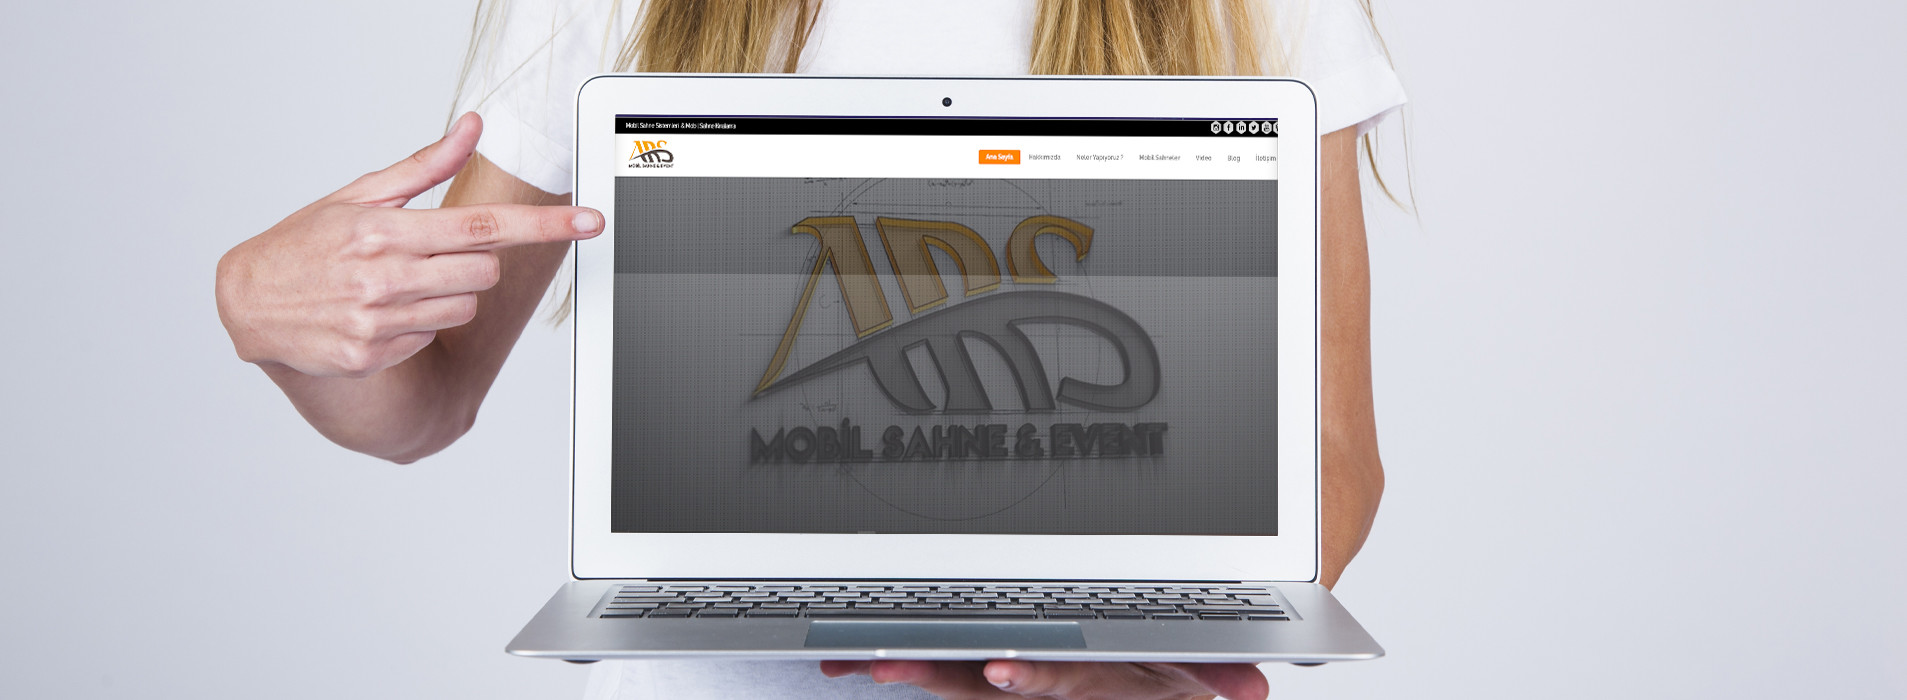 Ars Mobil Sahne Web Site Tasarımı